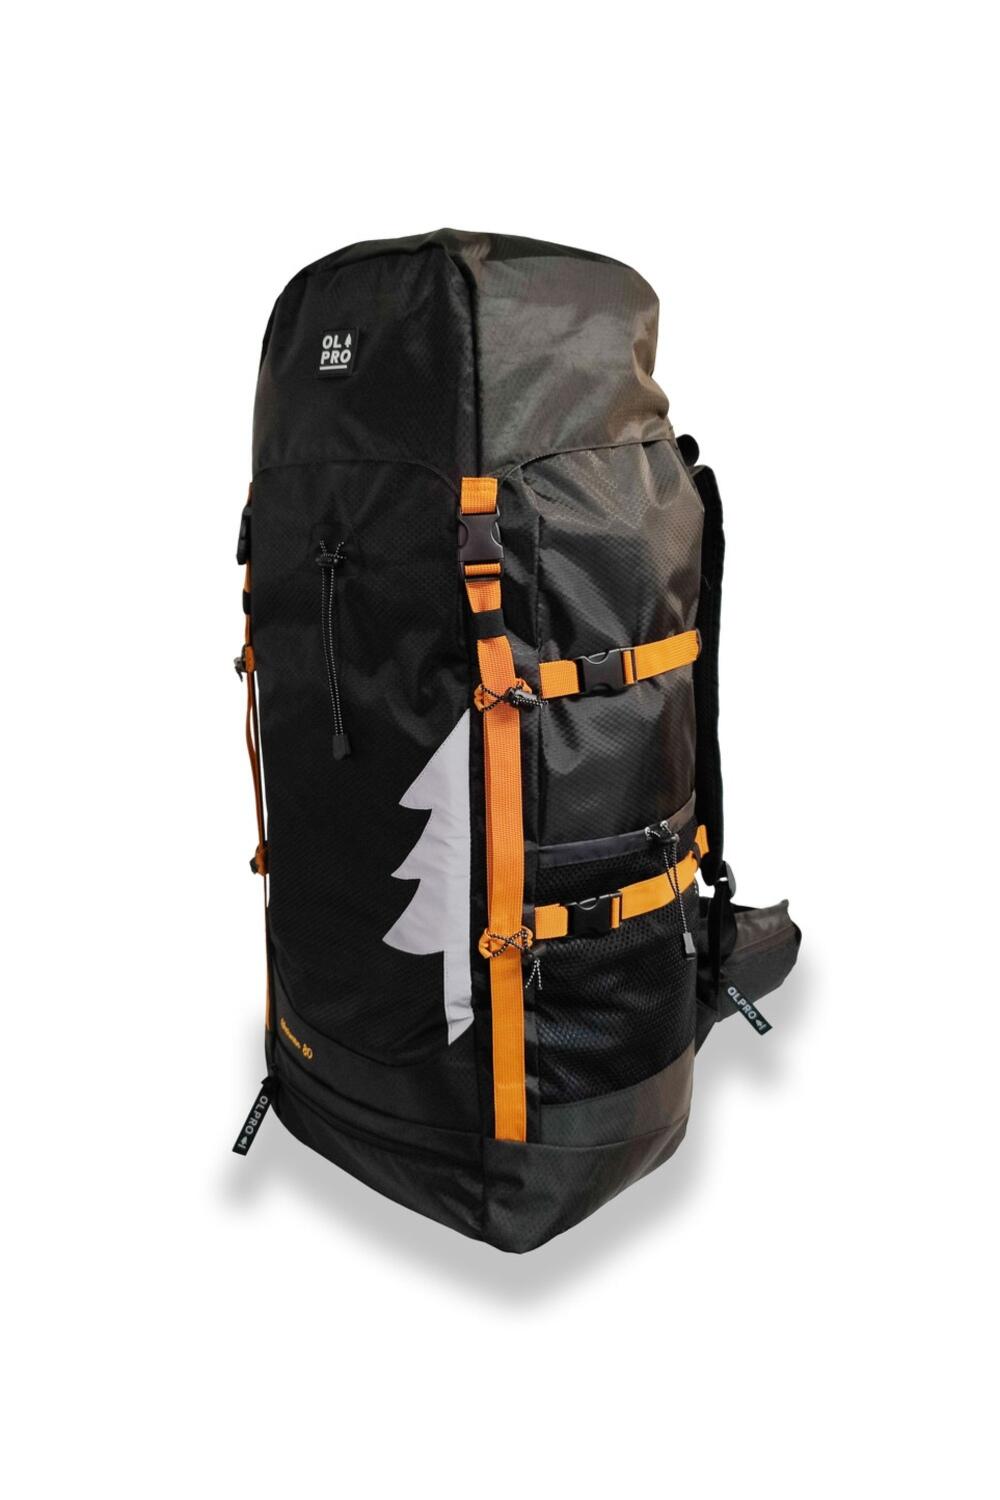 OLPRO 80L Rucksack Bag Black 4/4